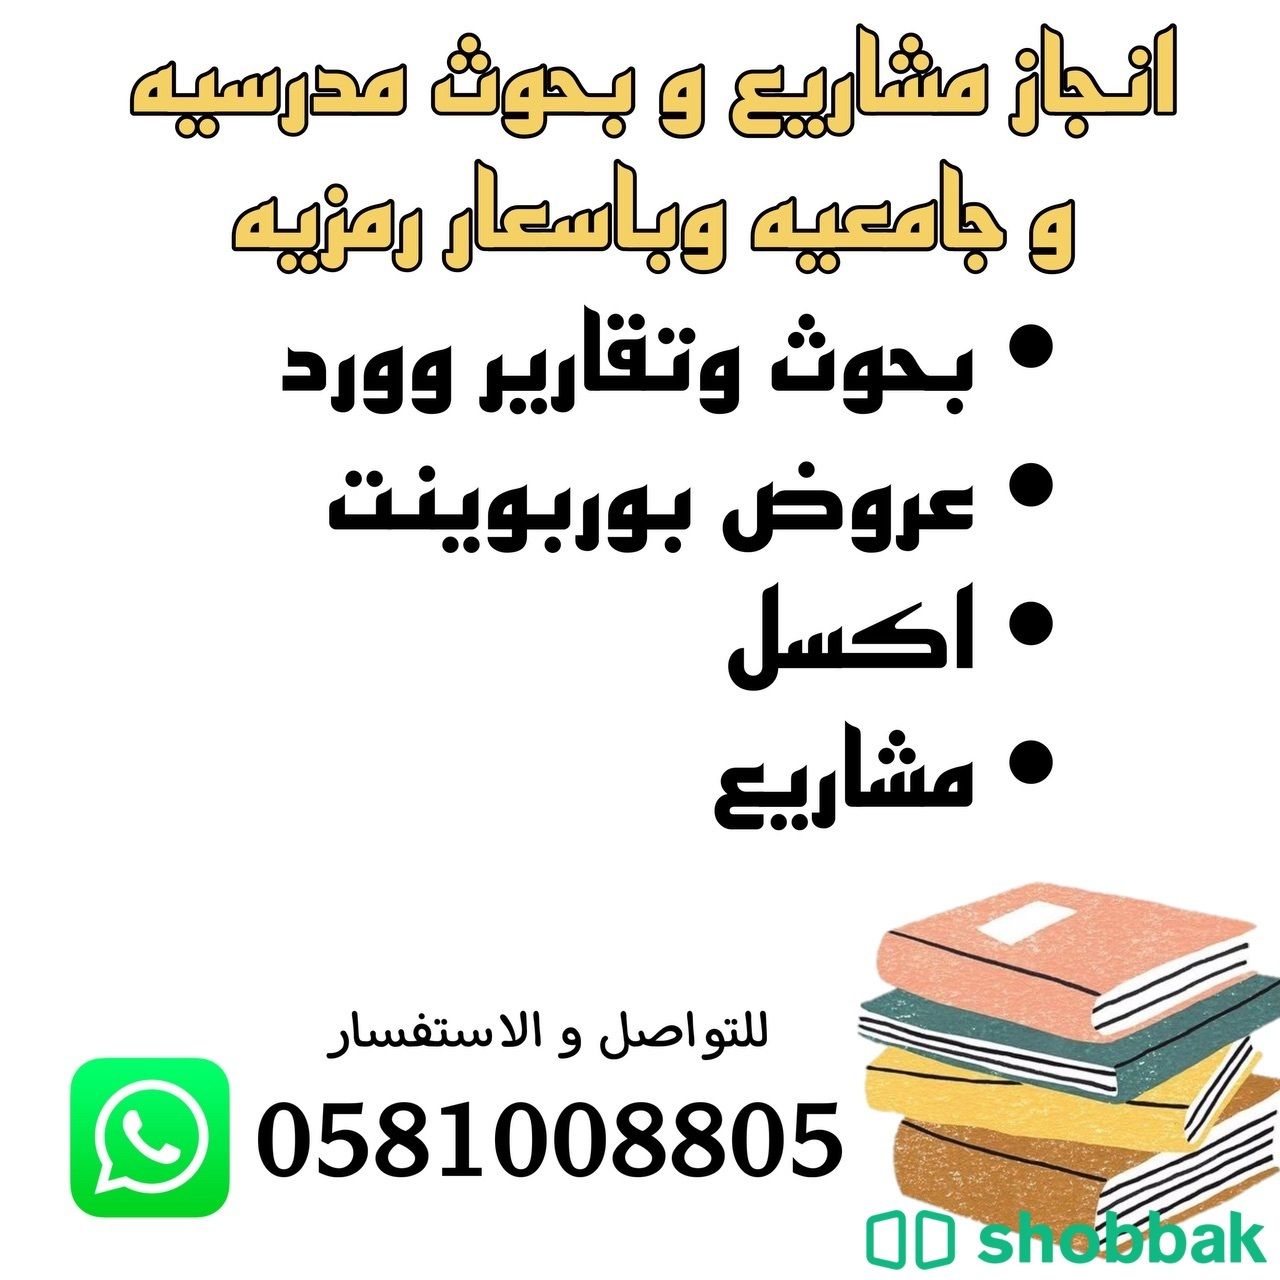 بحوث ومشاريع مدرسيه و جامعيه  Shobbak Saudi Arabia